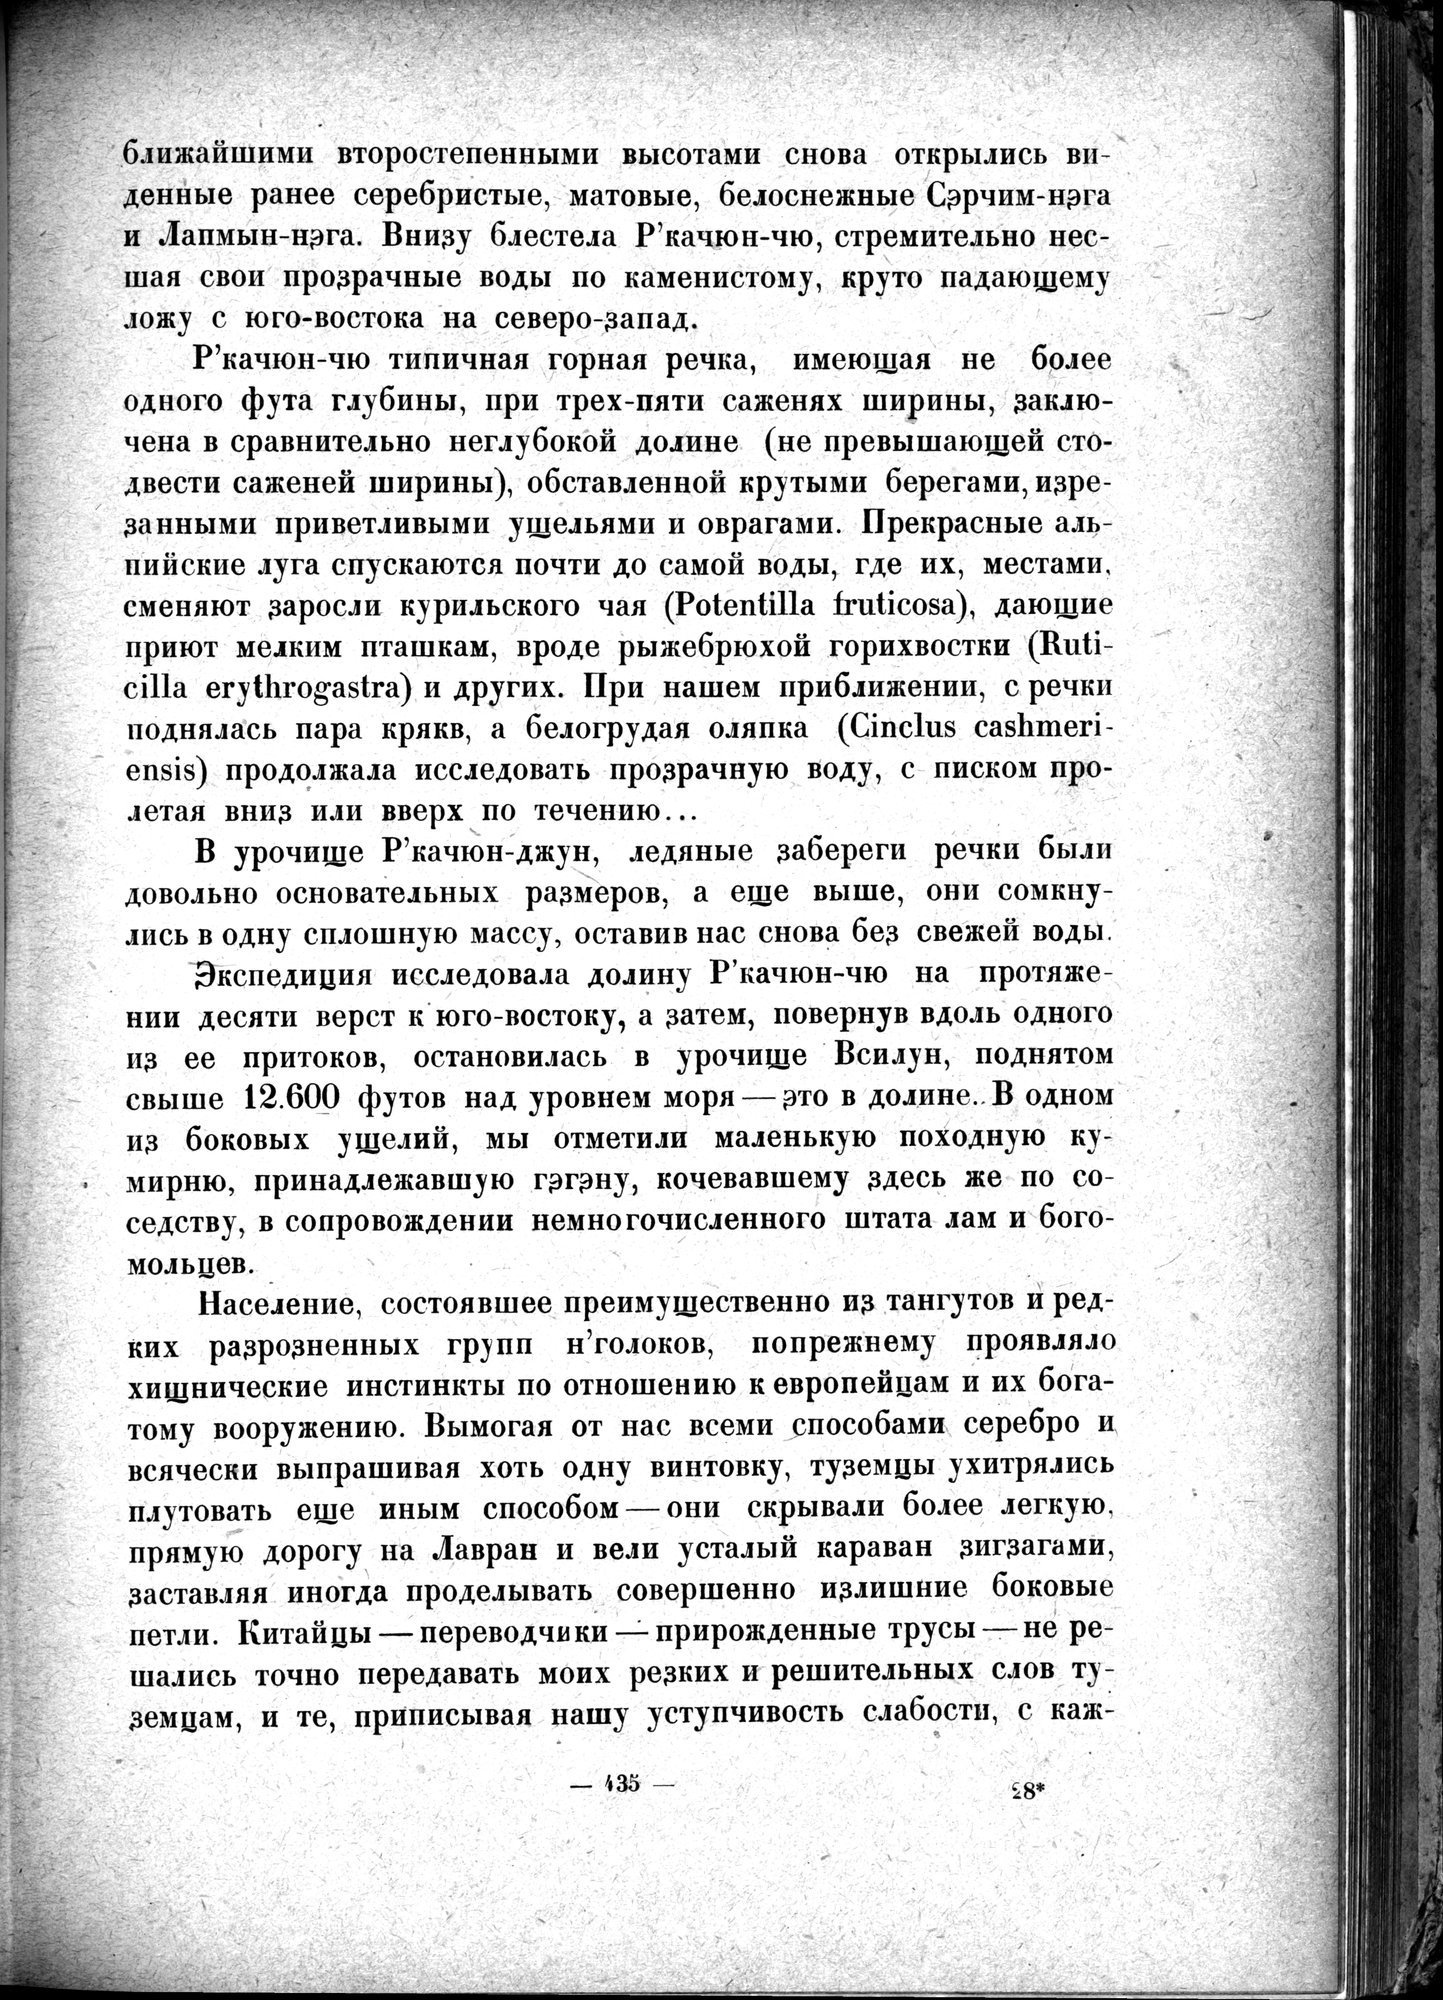 Mongoliya i Amdo i mertby gorod Khara-Khoto : vol.1 / Page 497 (Grayscale High Resolution Image)